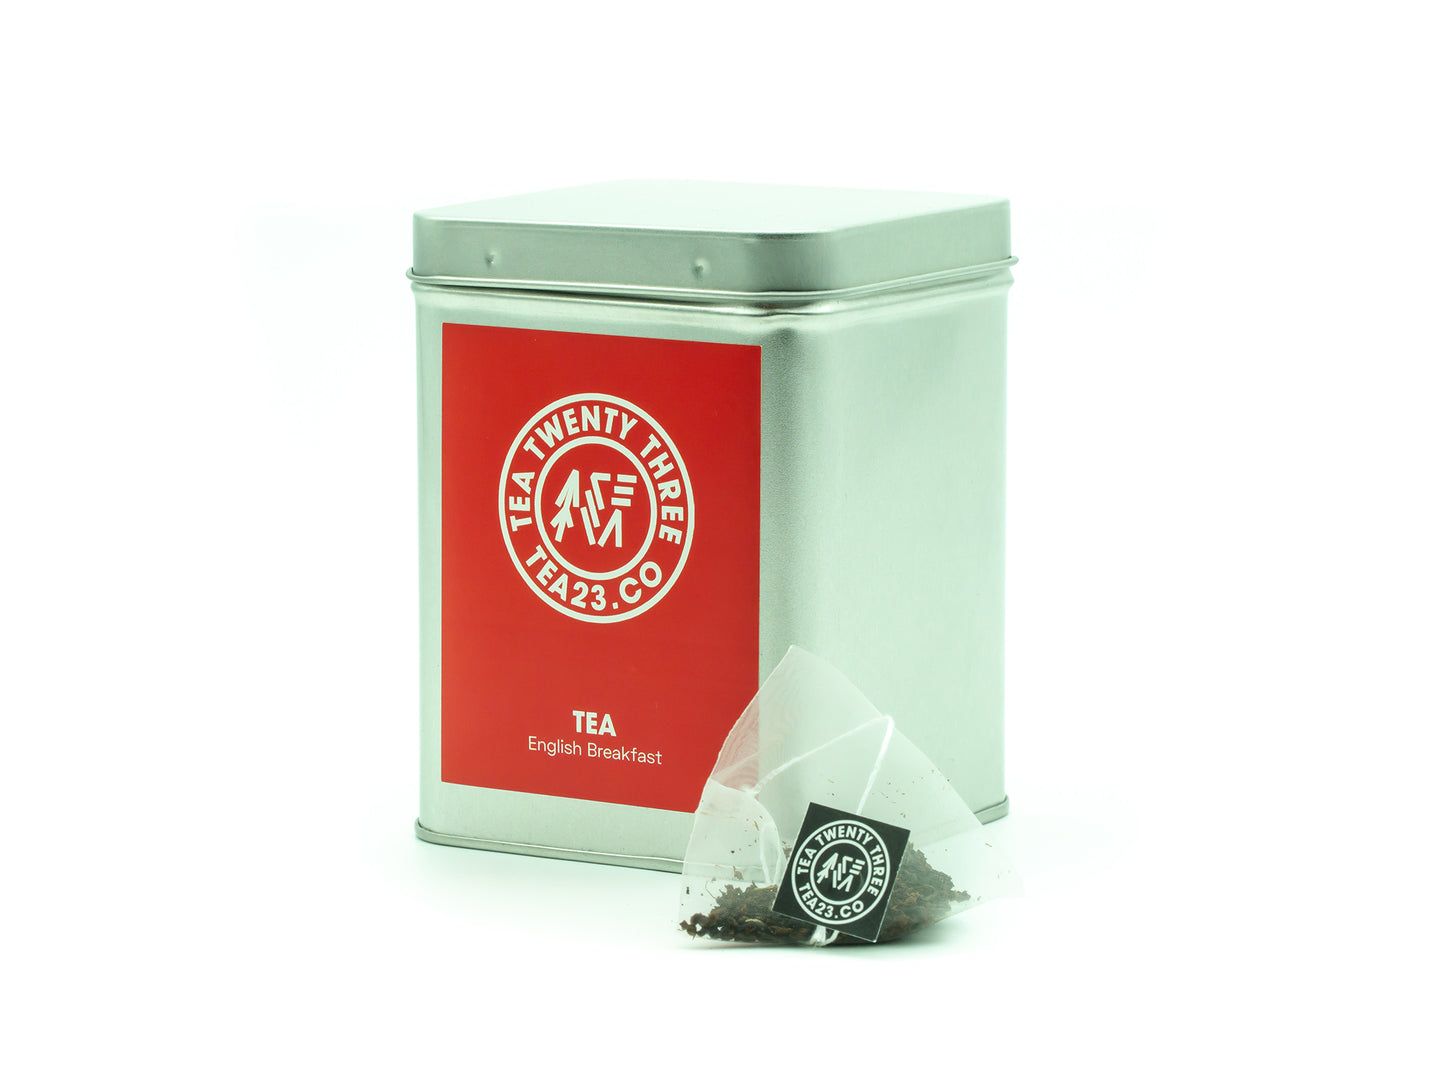 An English Breakfast Tea pyramid tea bag from Tea23 in front of a tea caddy